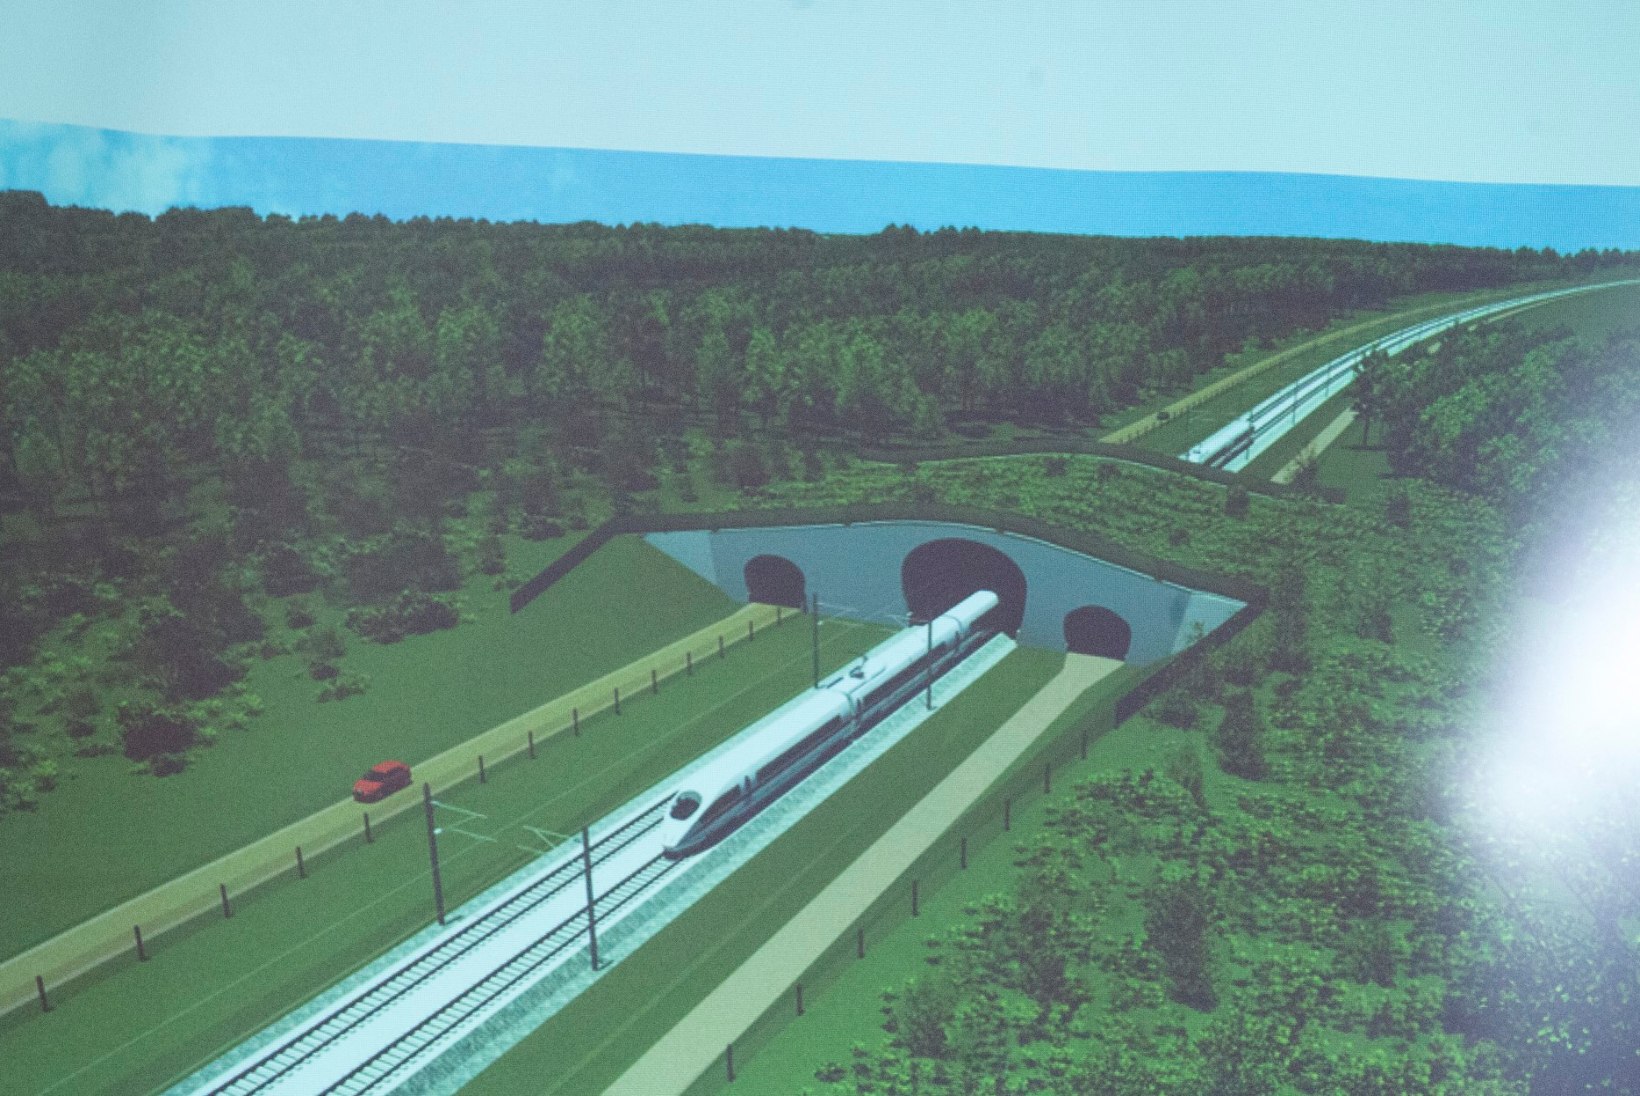 Kiri | Milleks ehitame Rail Balticut?